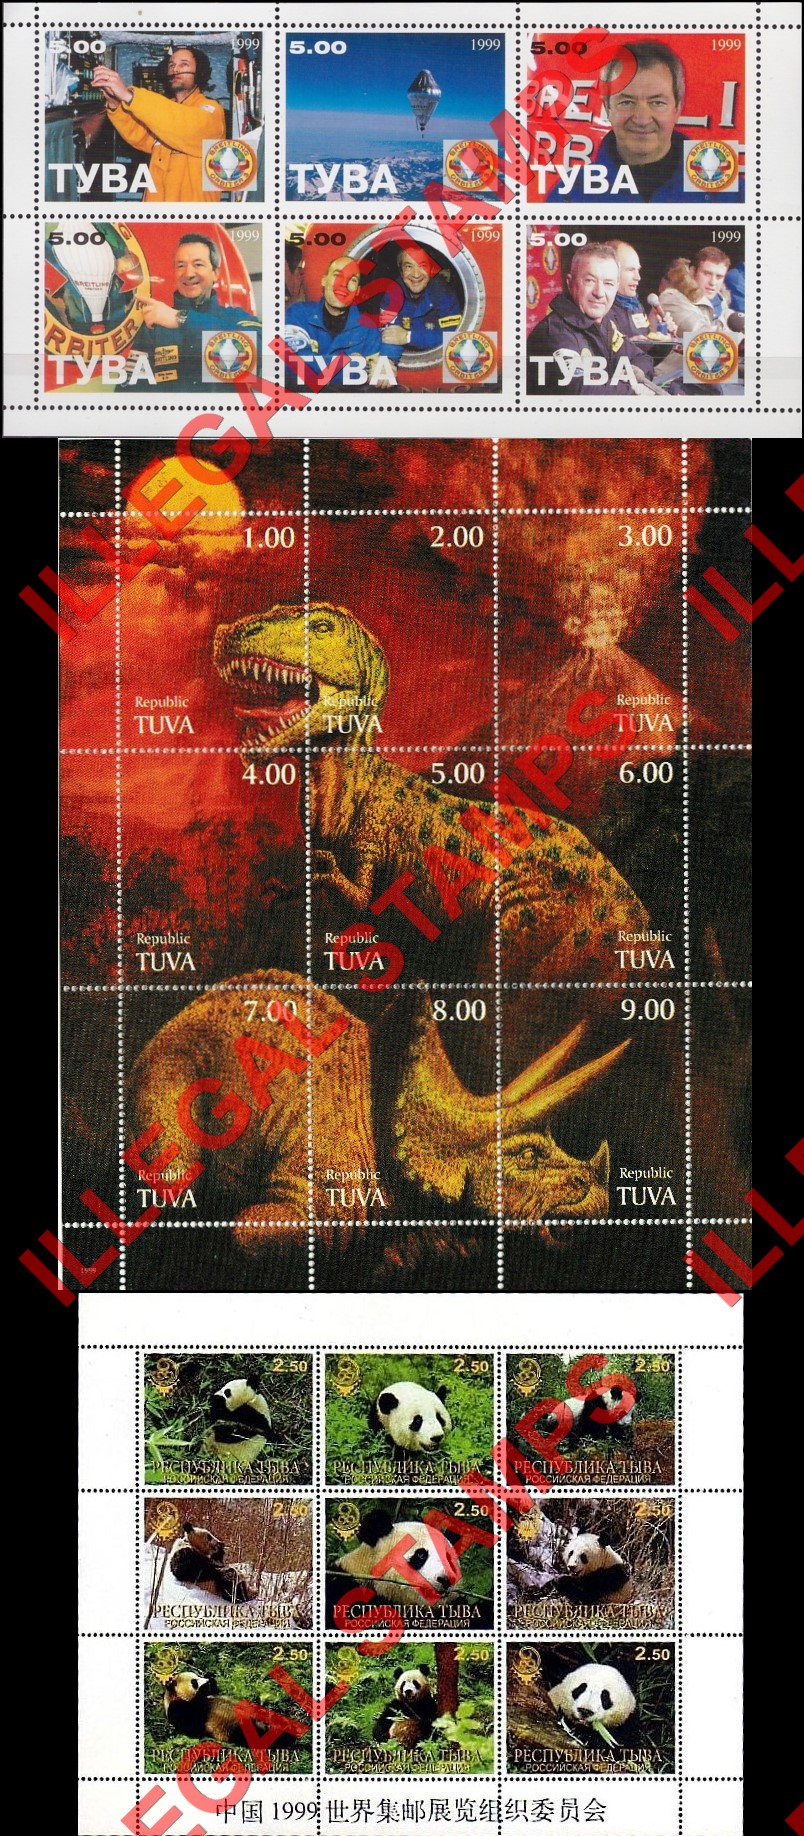 Republic of Tuva 1999 Counterfeit Illegal Stamps (Part 2)